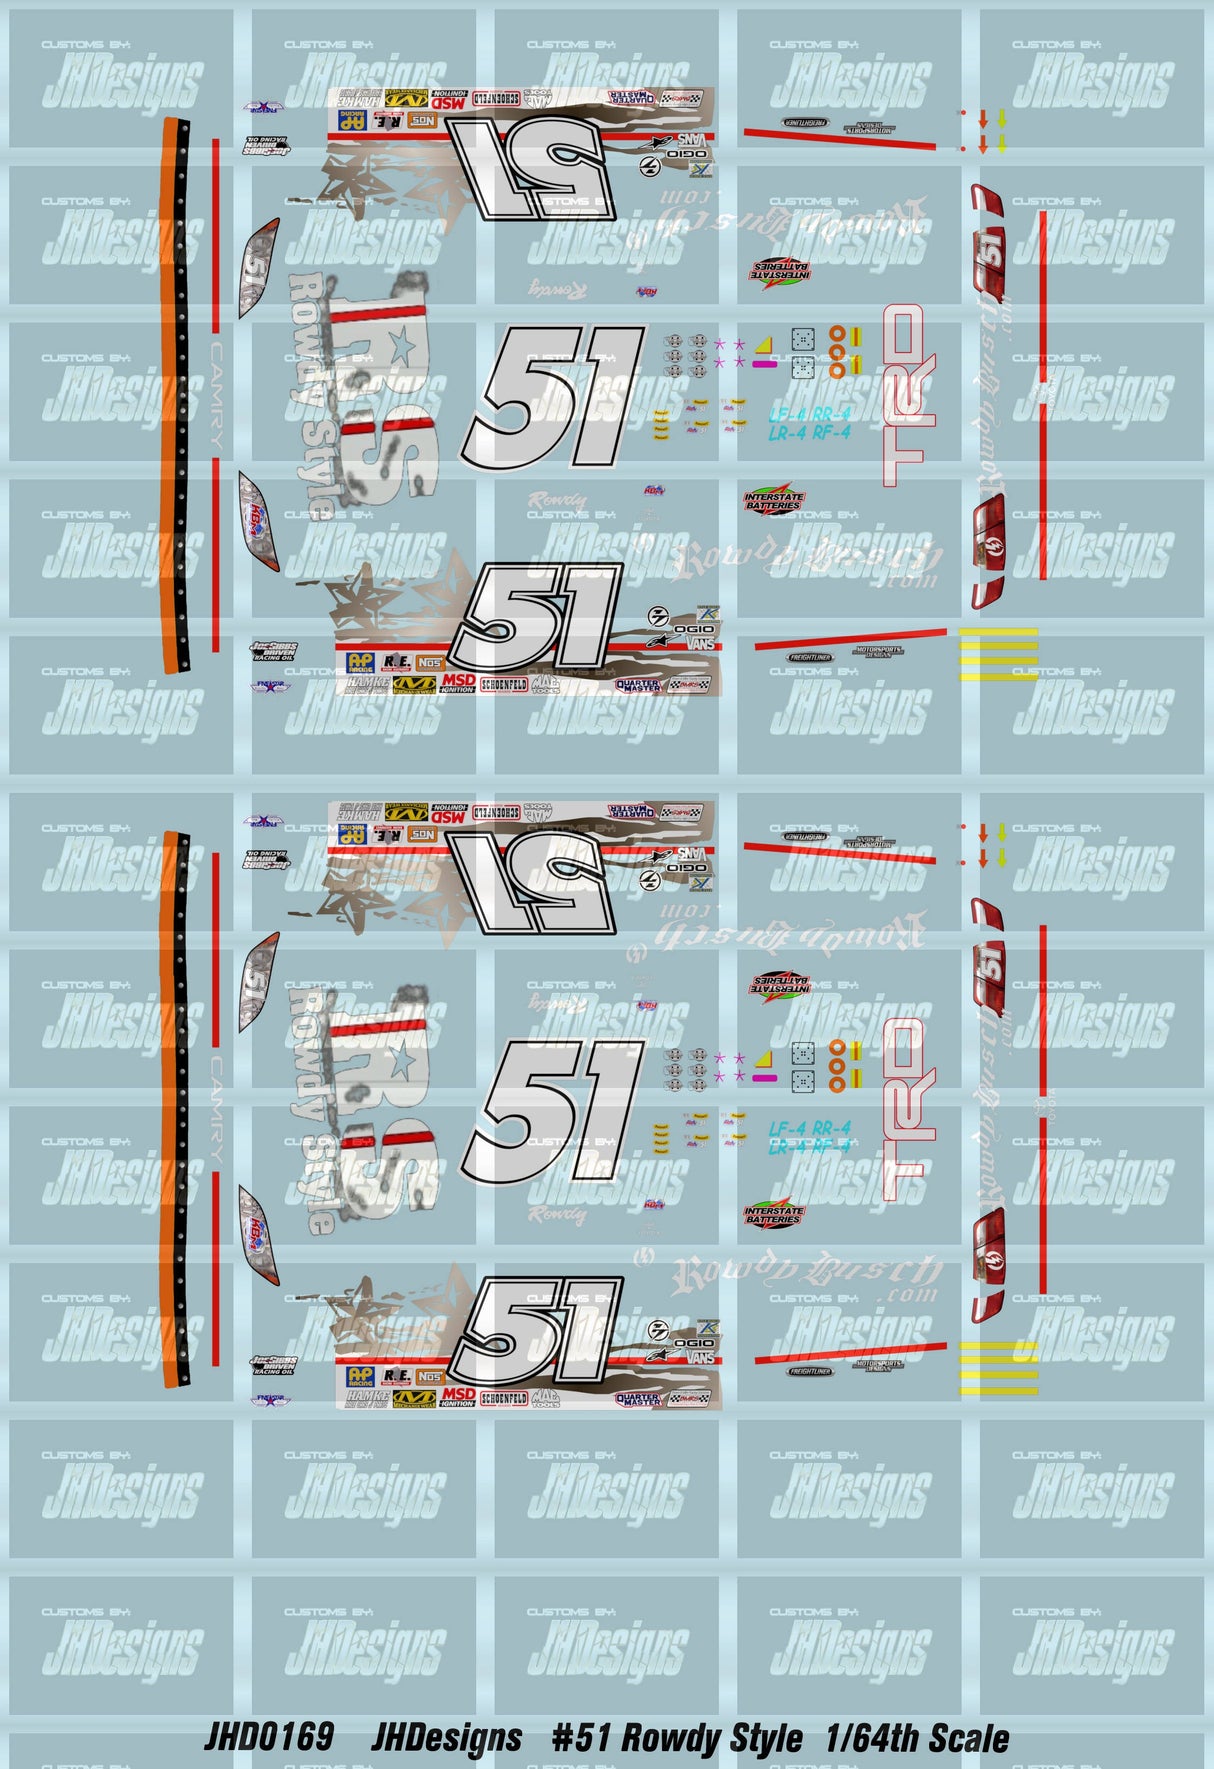 JH Designs Kyle Busch 2009 LMS #18 Rowdy Style 1:64 Racecar Decal Set